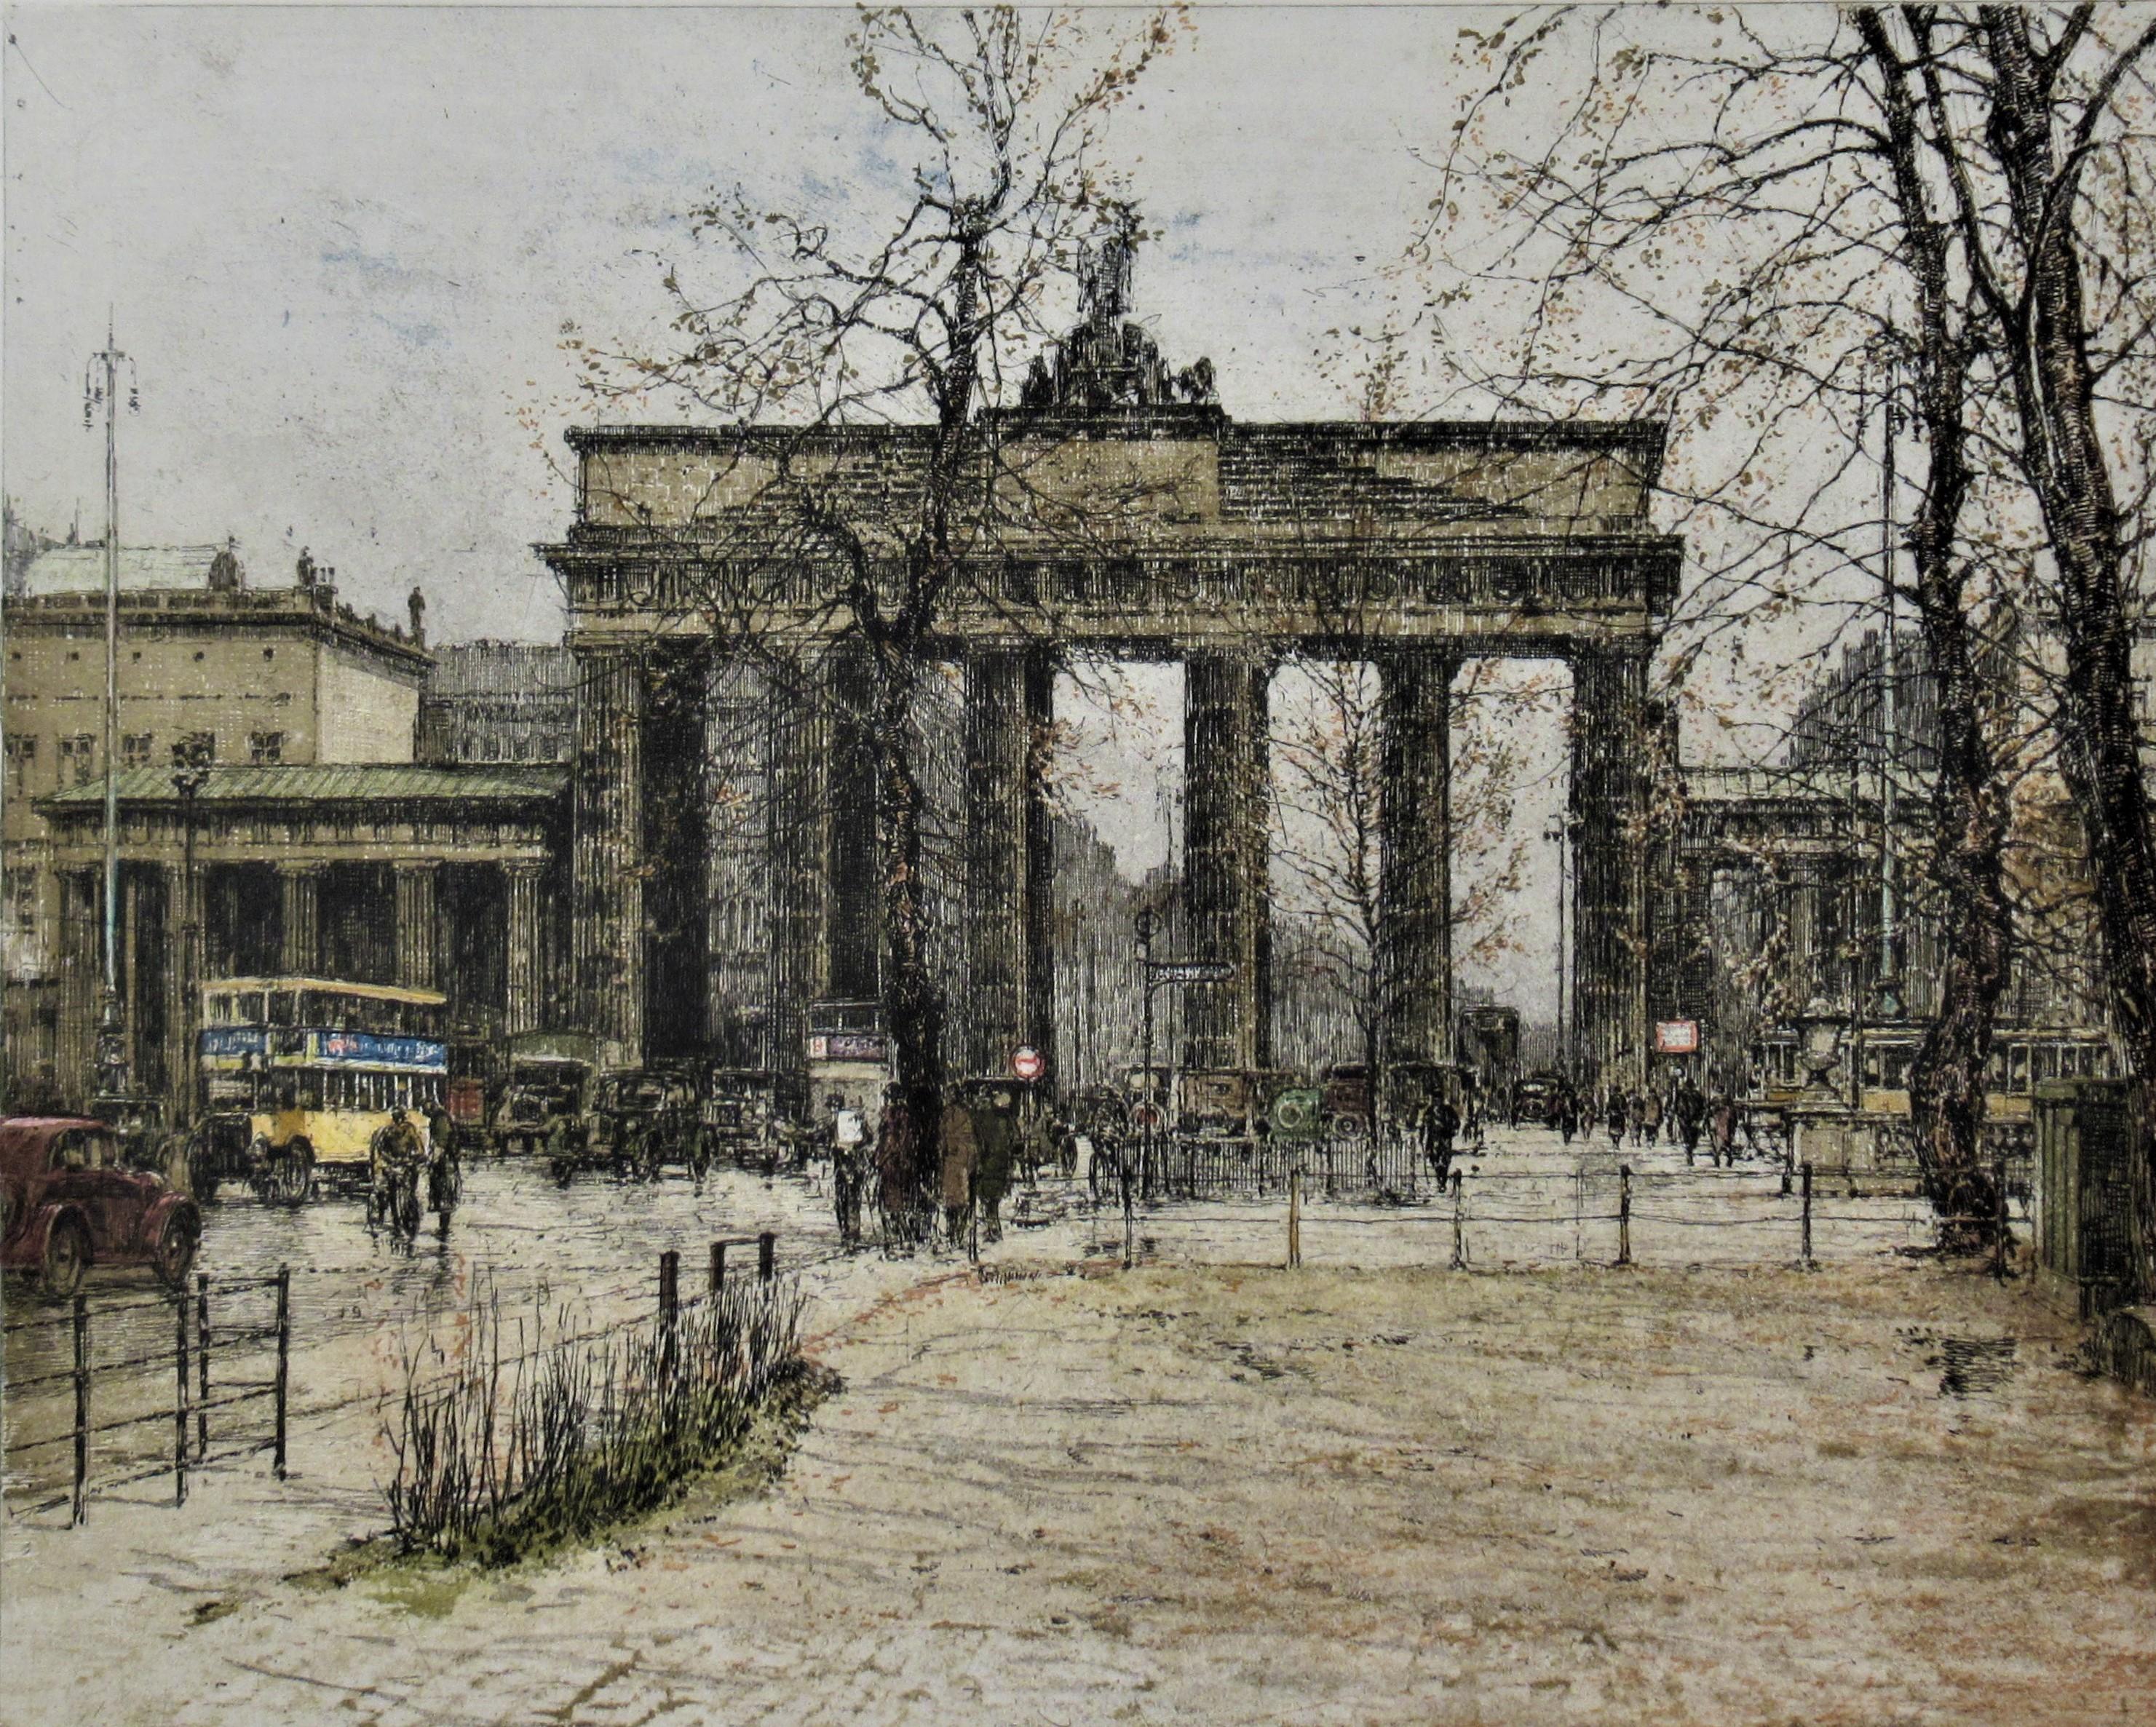 Berlin, Brandenburg Gate, Germany - Print by Luigi Kasimir